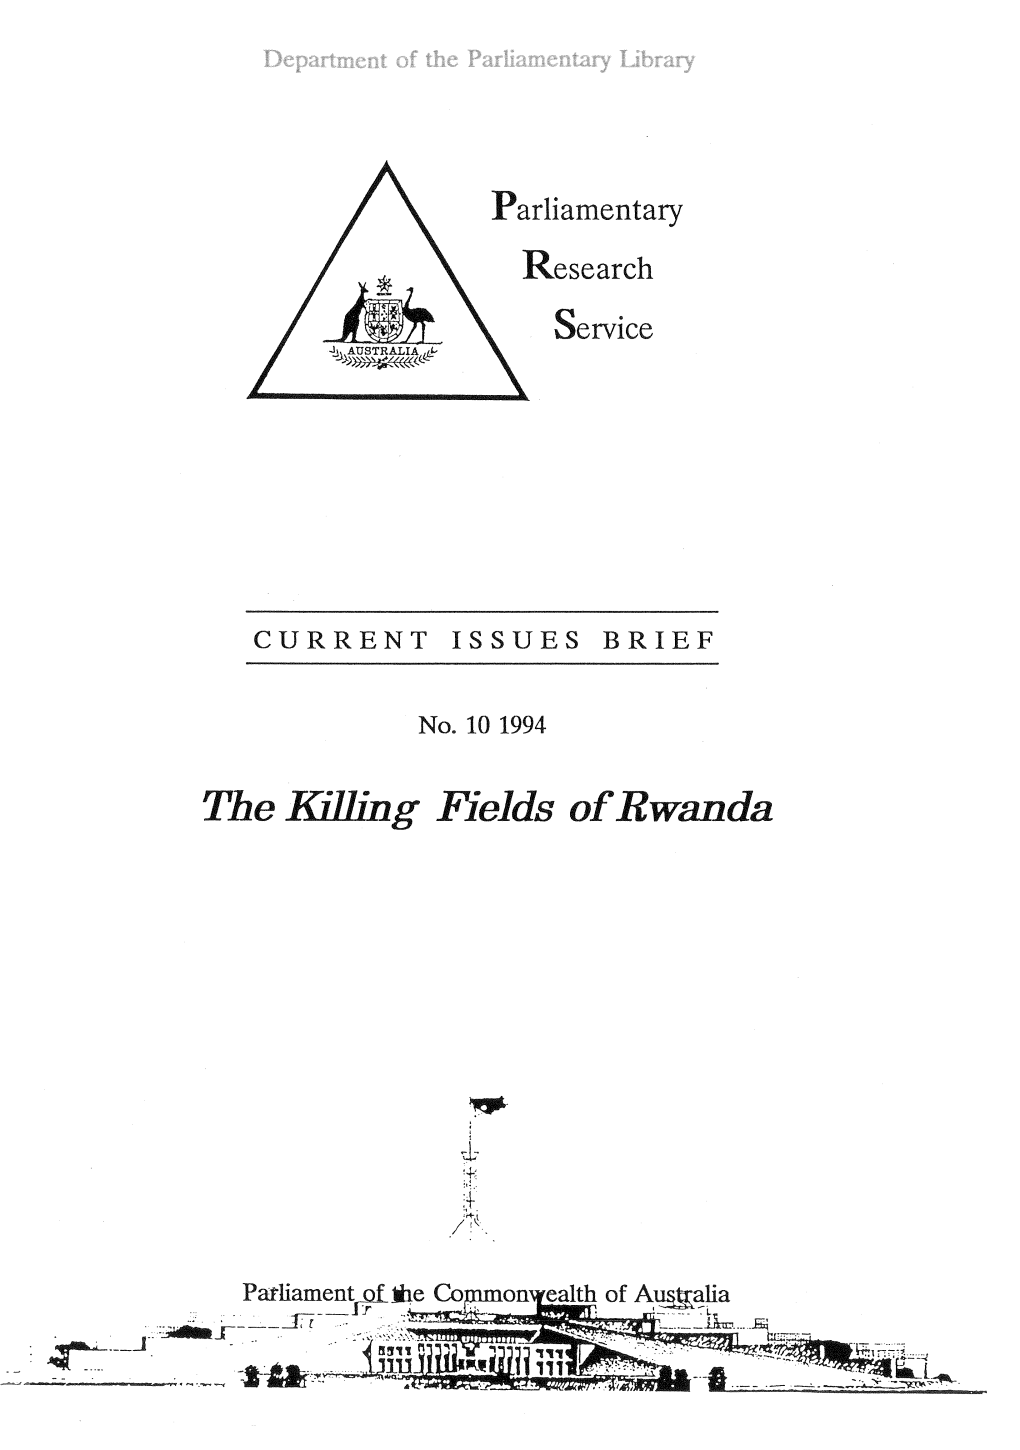 The Killing Fields of Rwanda